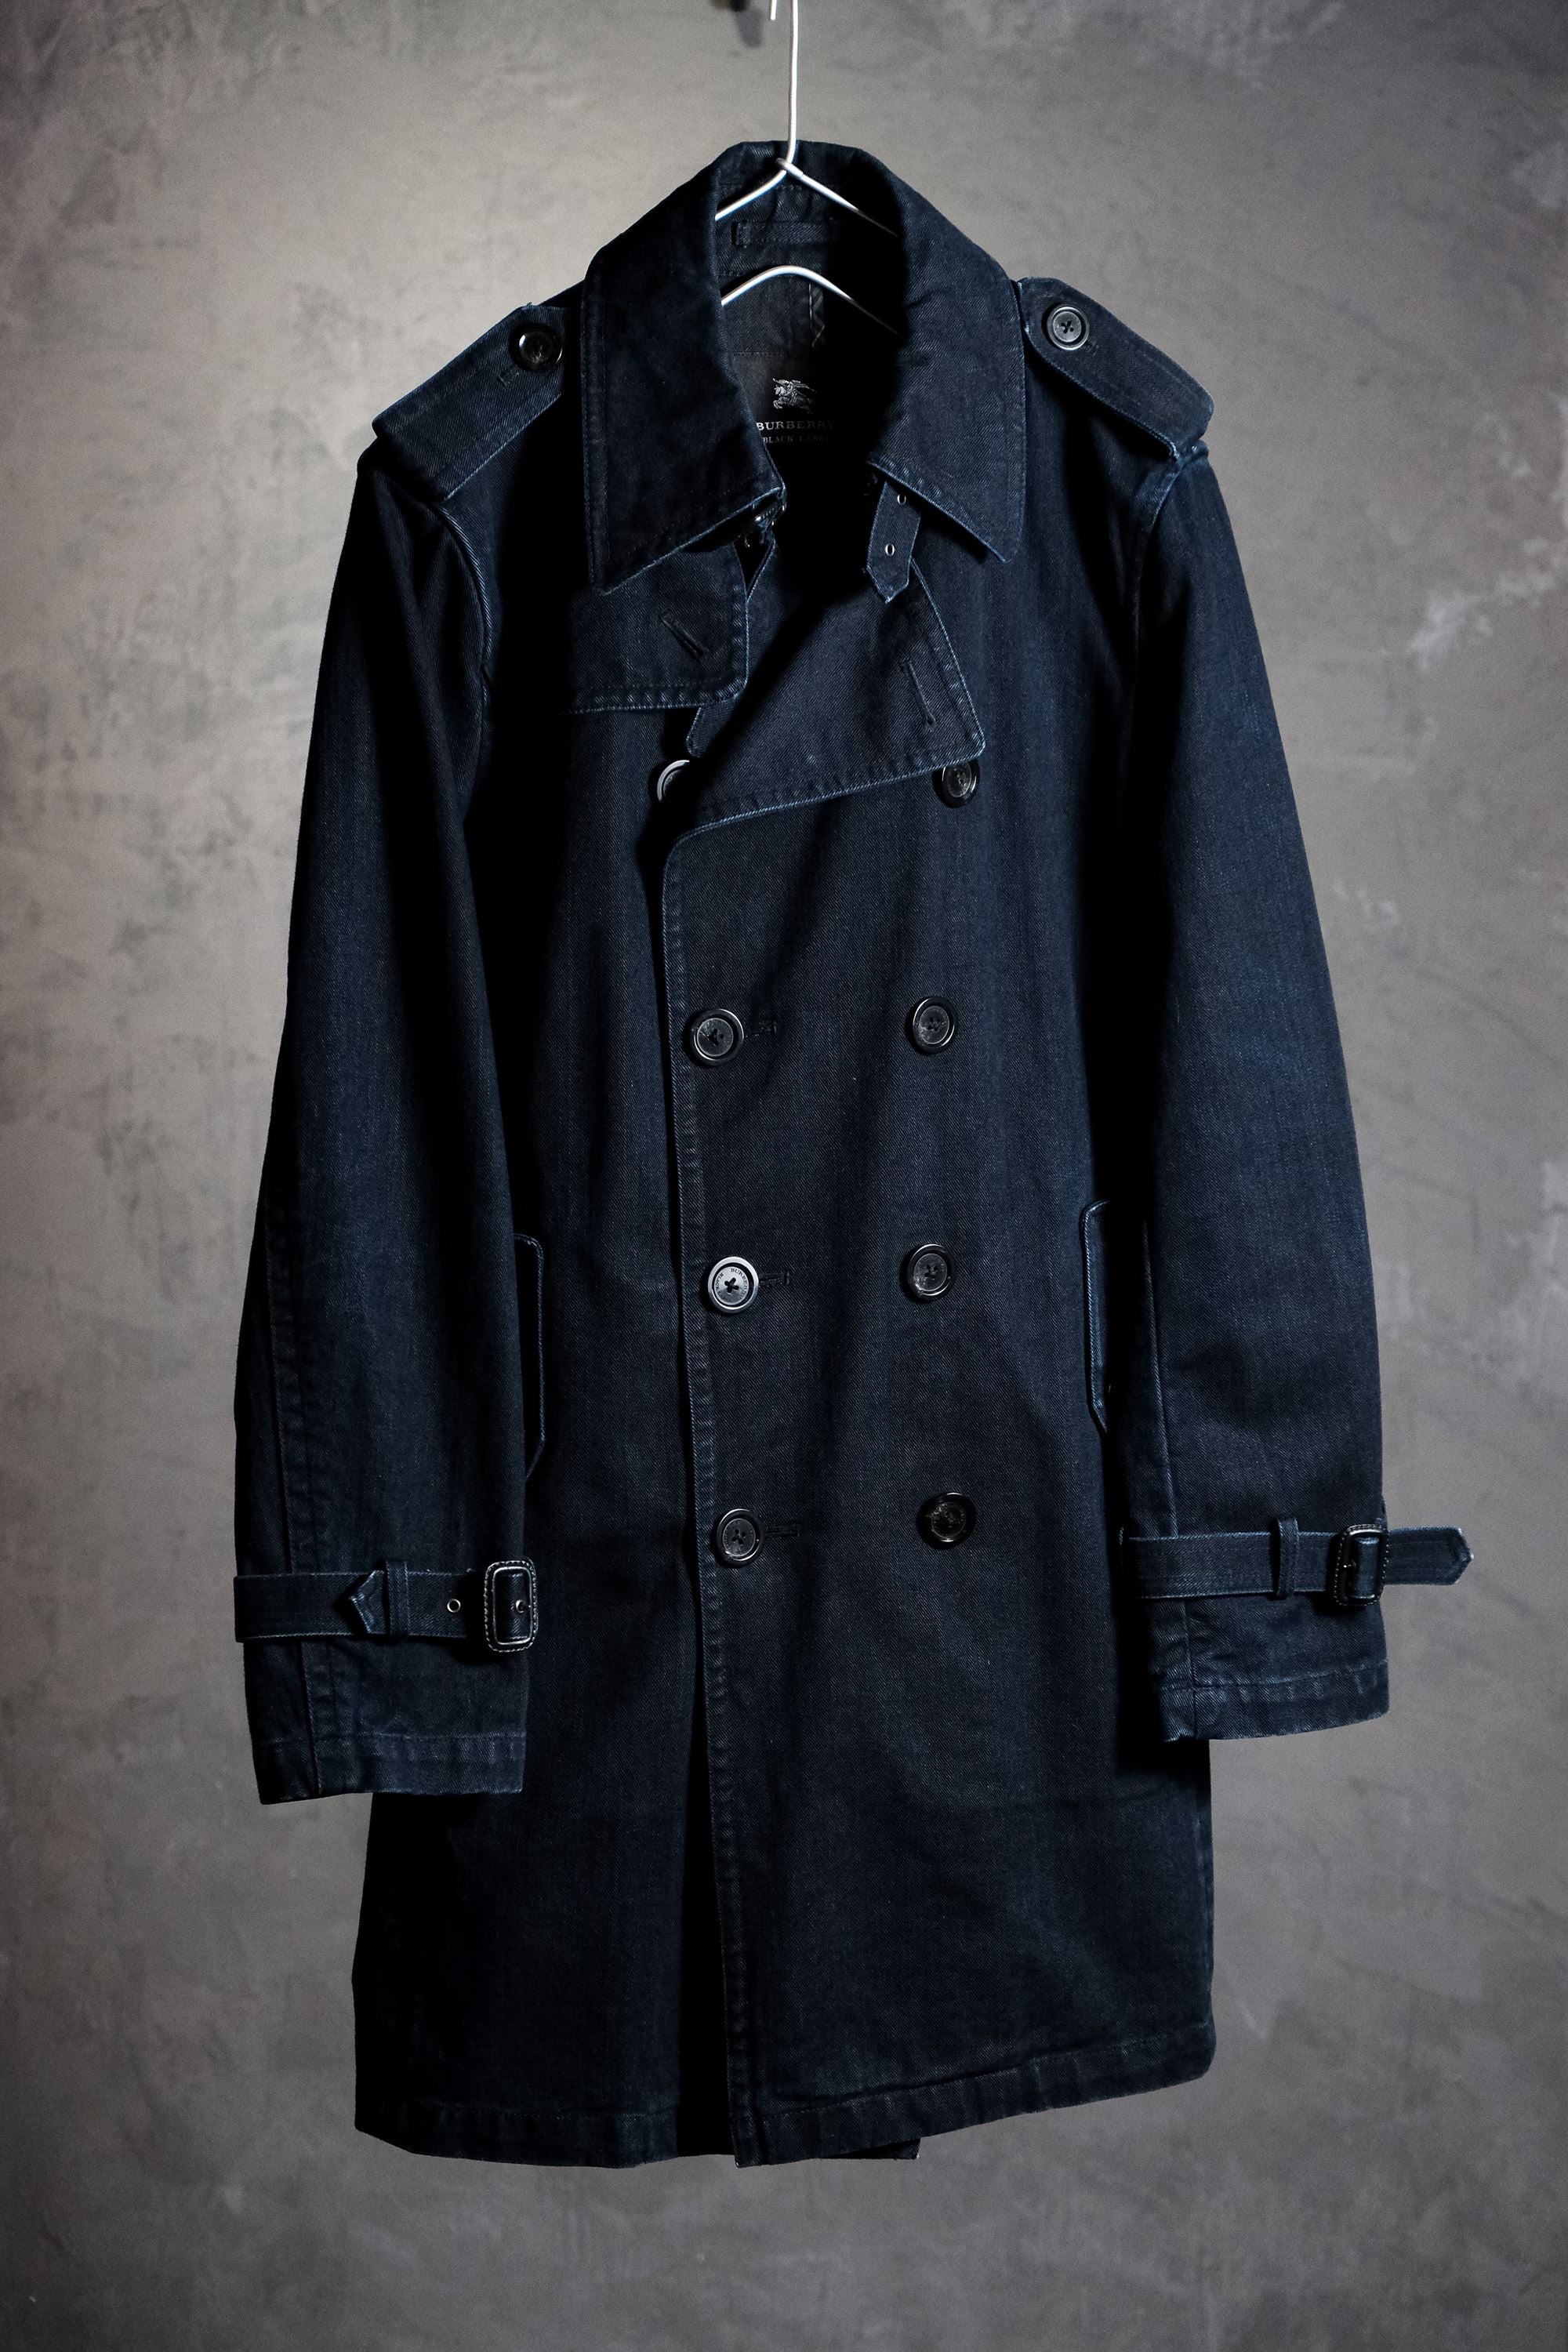 Burberry Black Label Denim Trench Coat